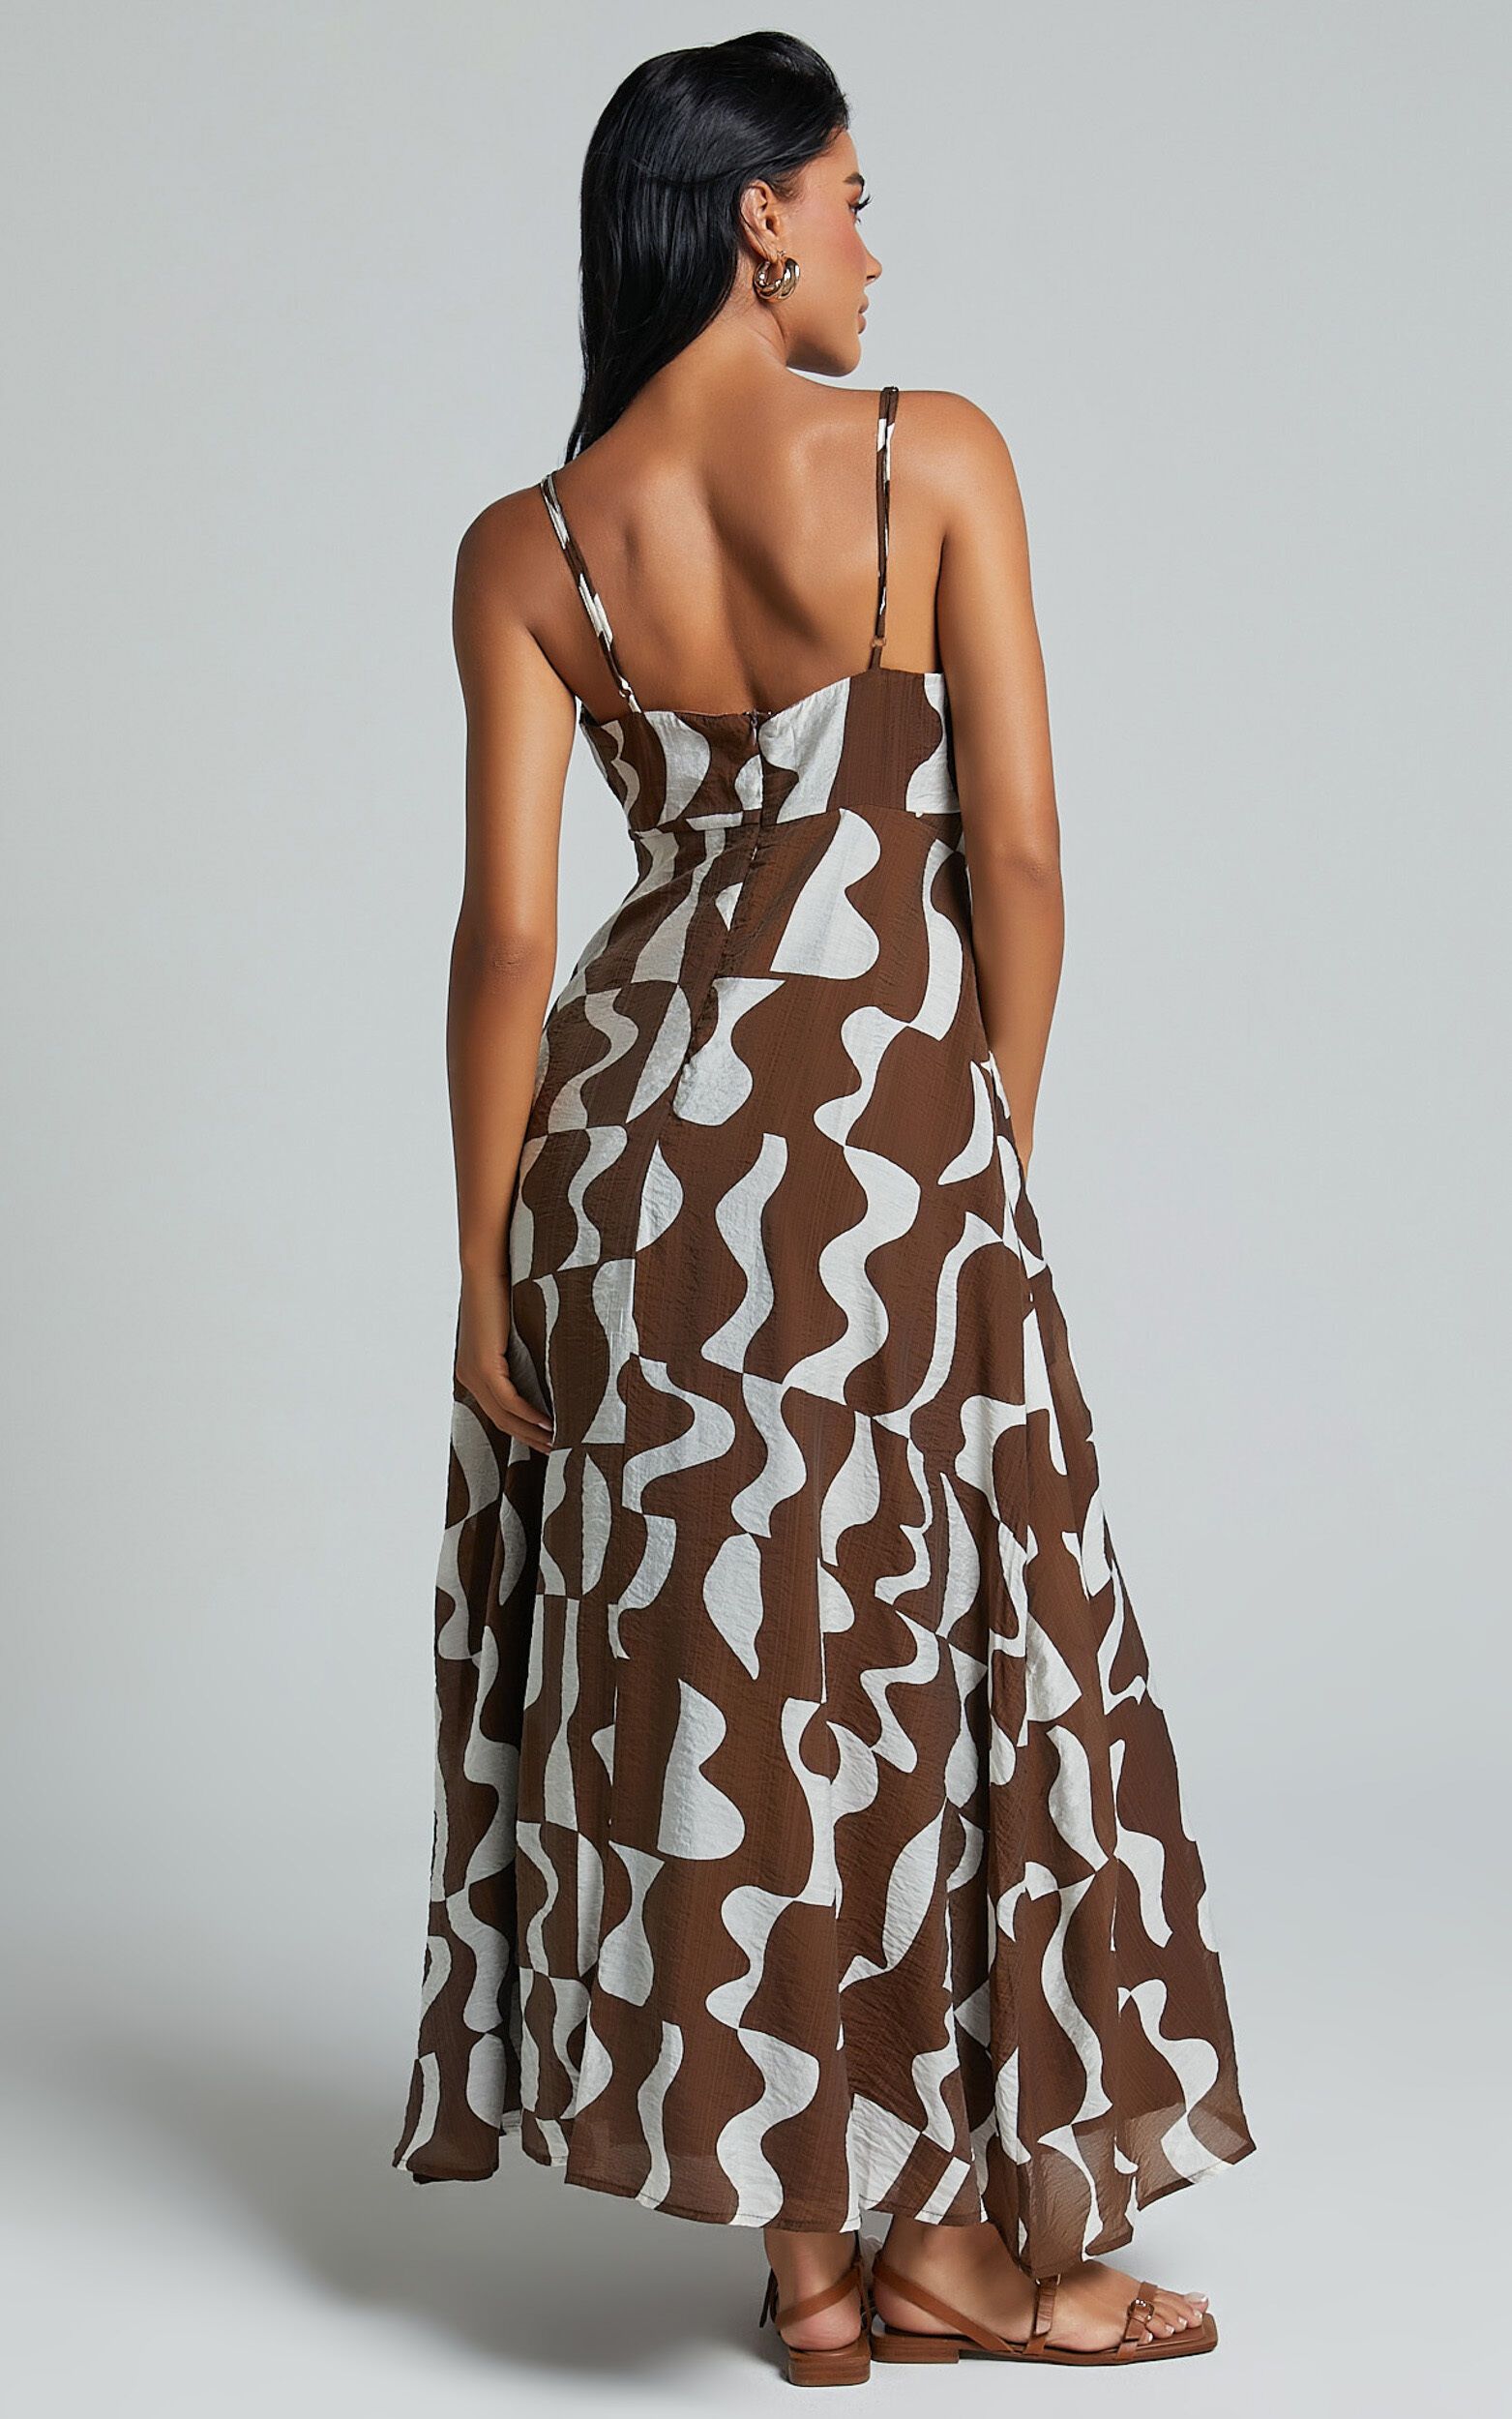 Elisabetta Midi Dress - Empire Waist A Line Dress in Chocolate Mono Wave | Showpo (ANZ)